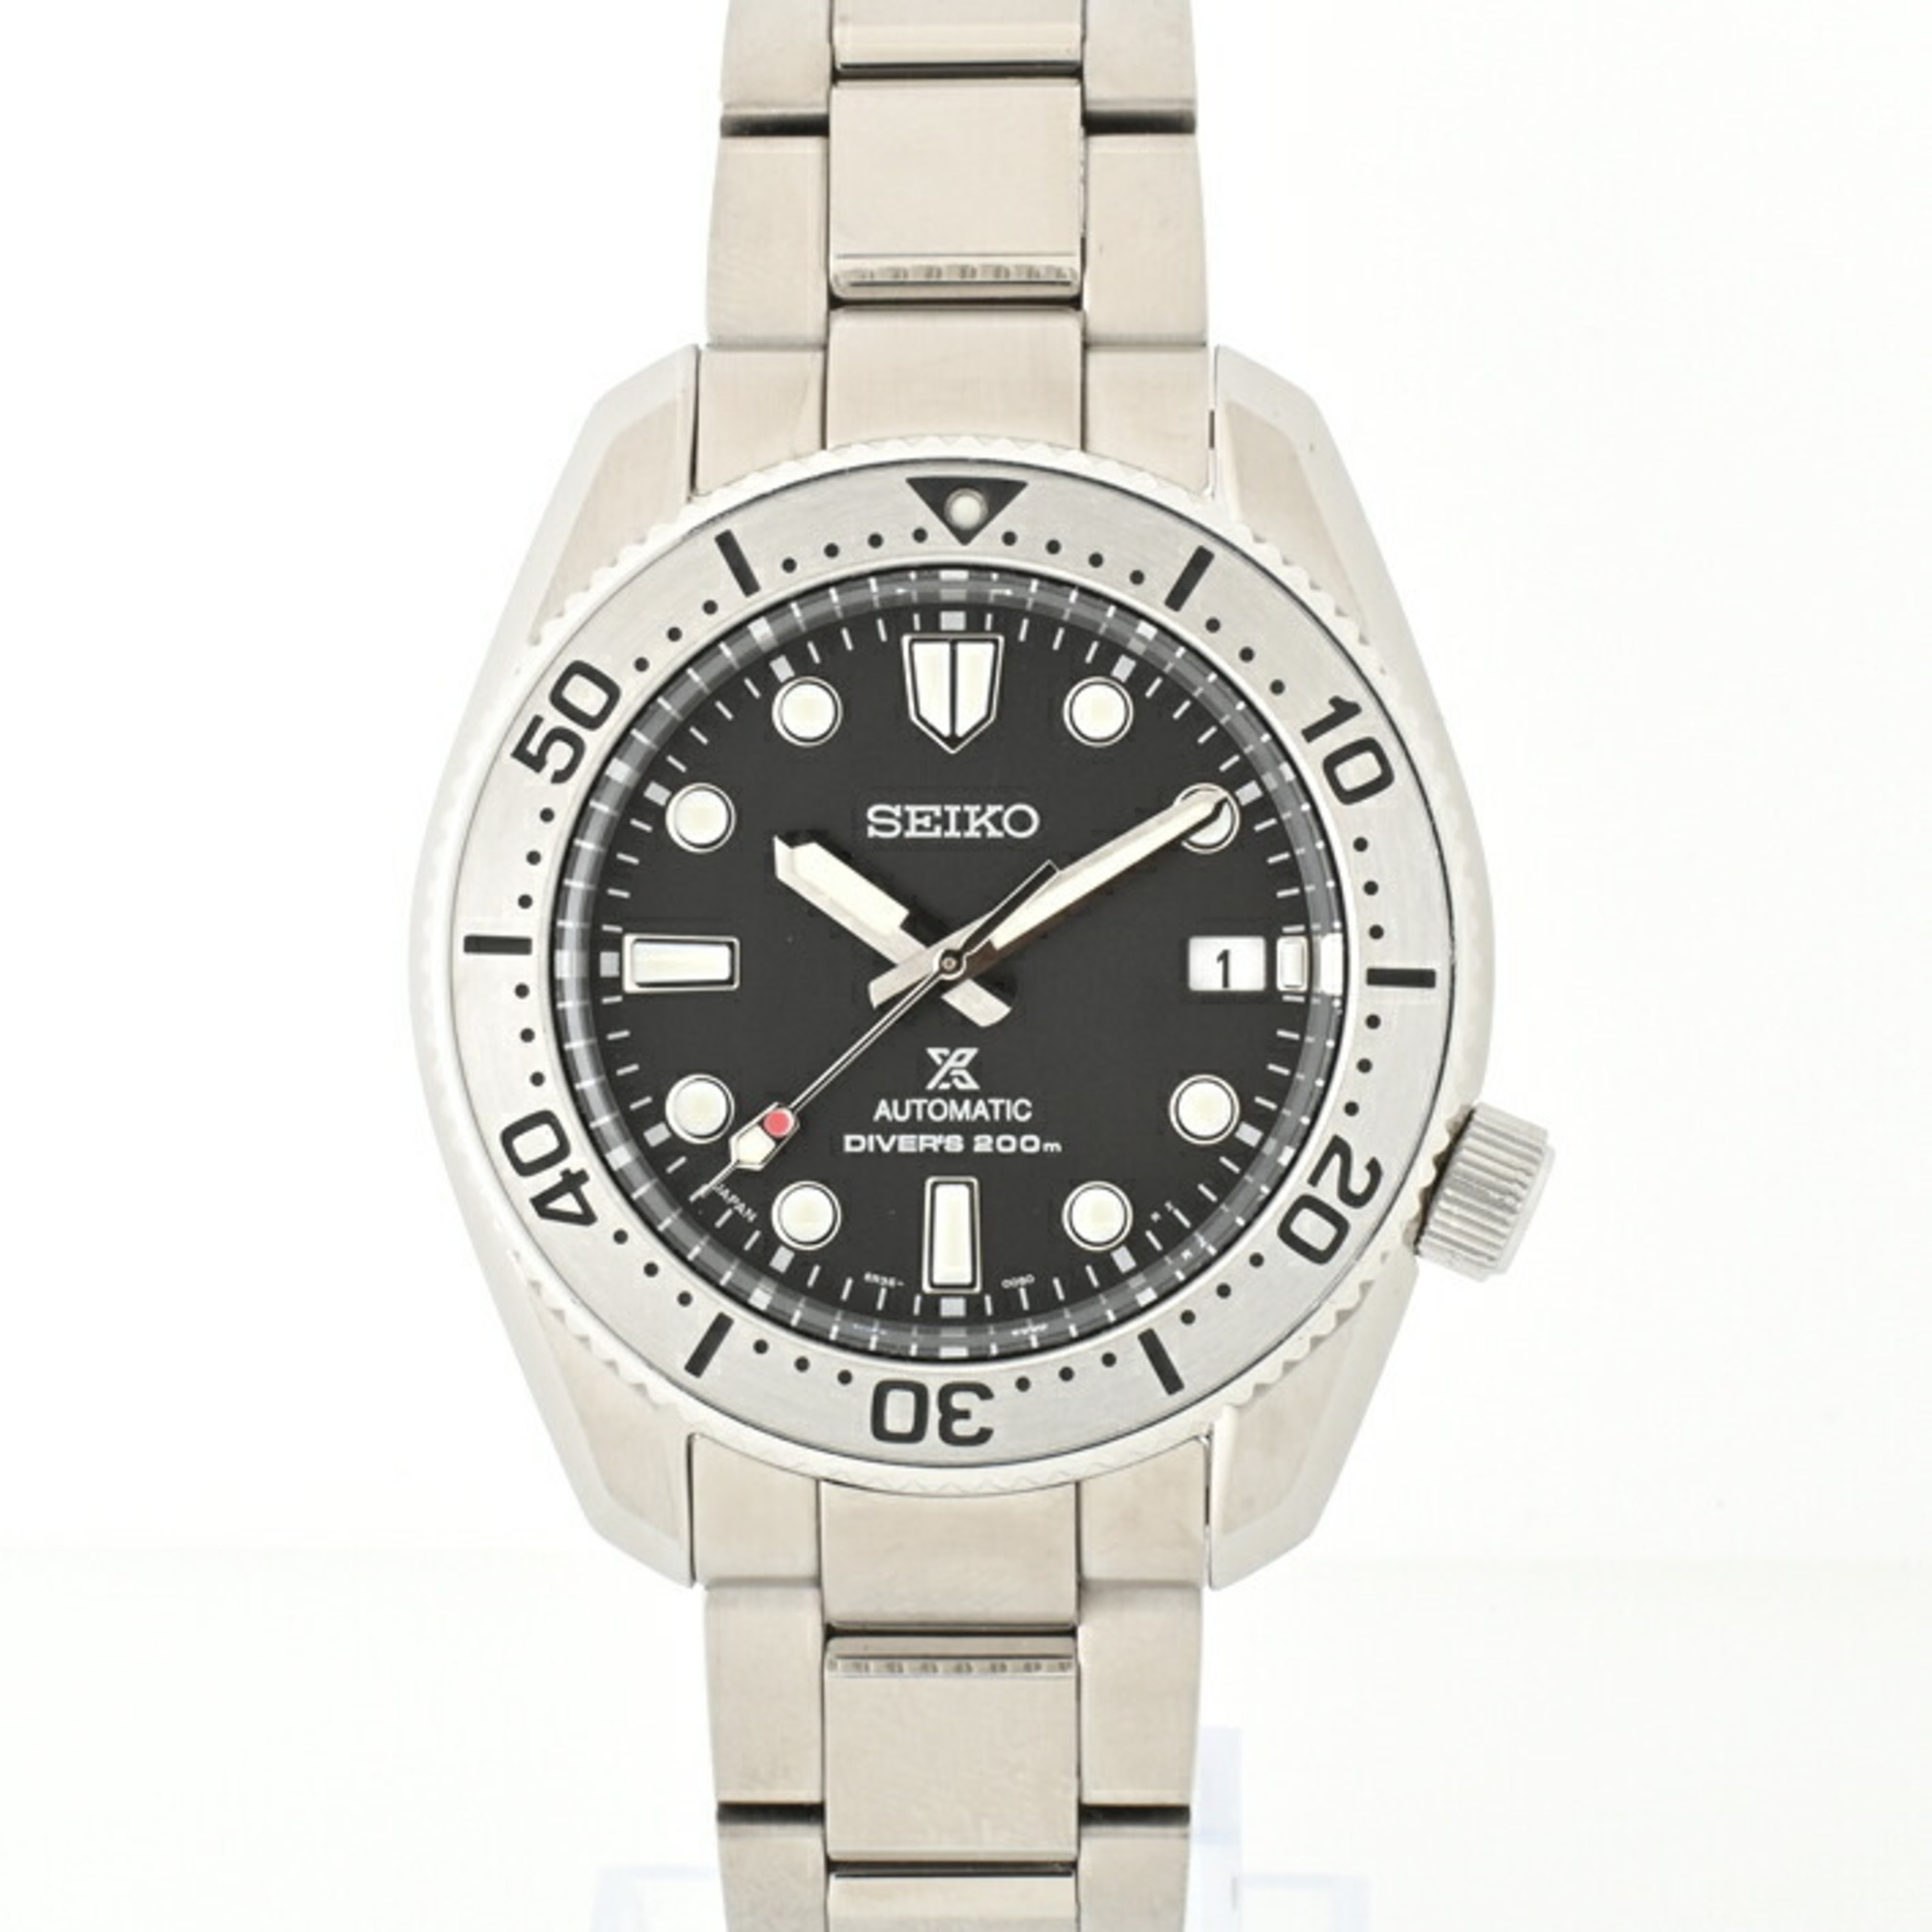 Seiko Prospex Diver Scuba Mechanical SBDC125 Automatic Watch E-154001